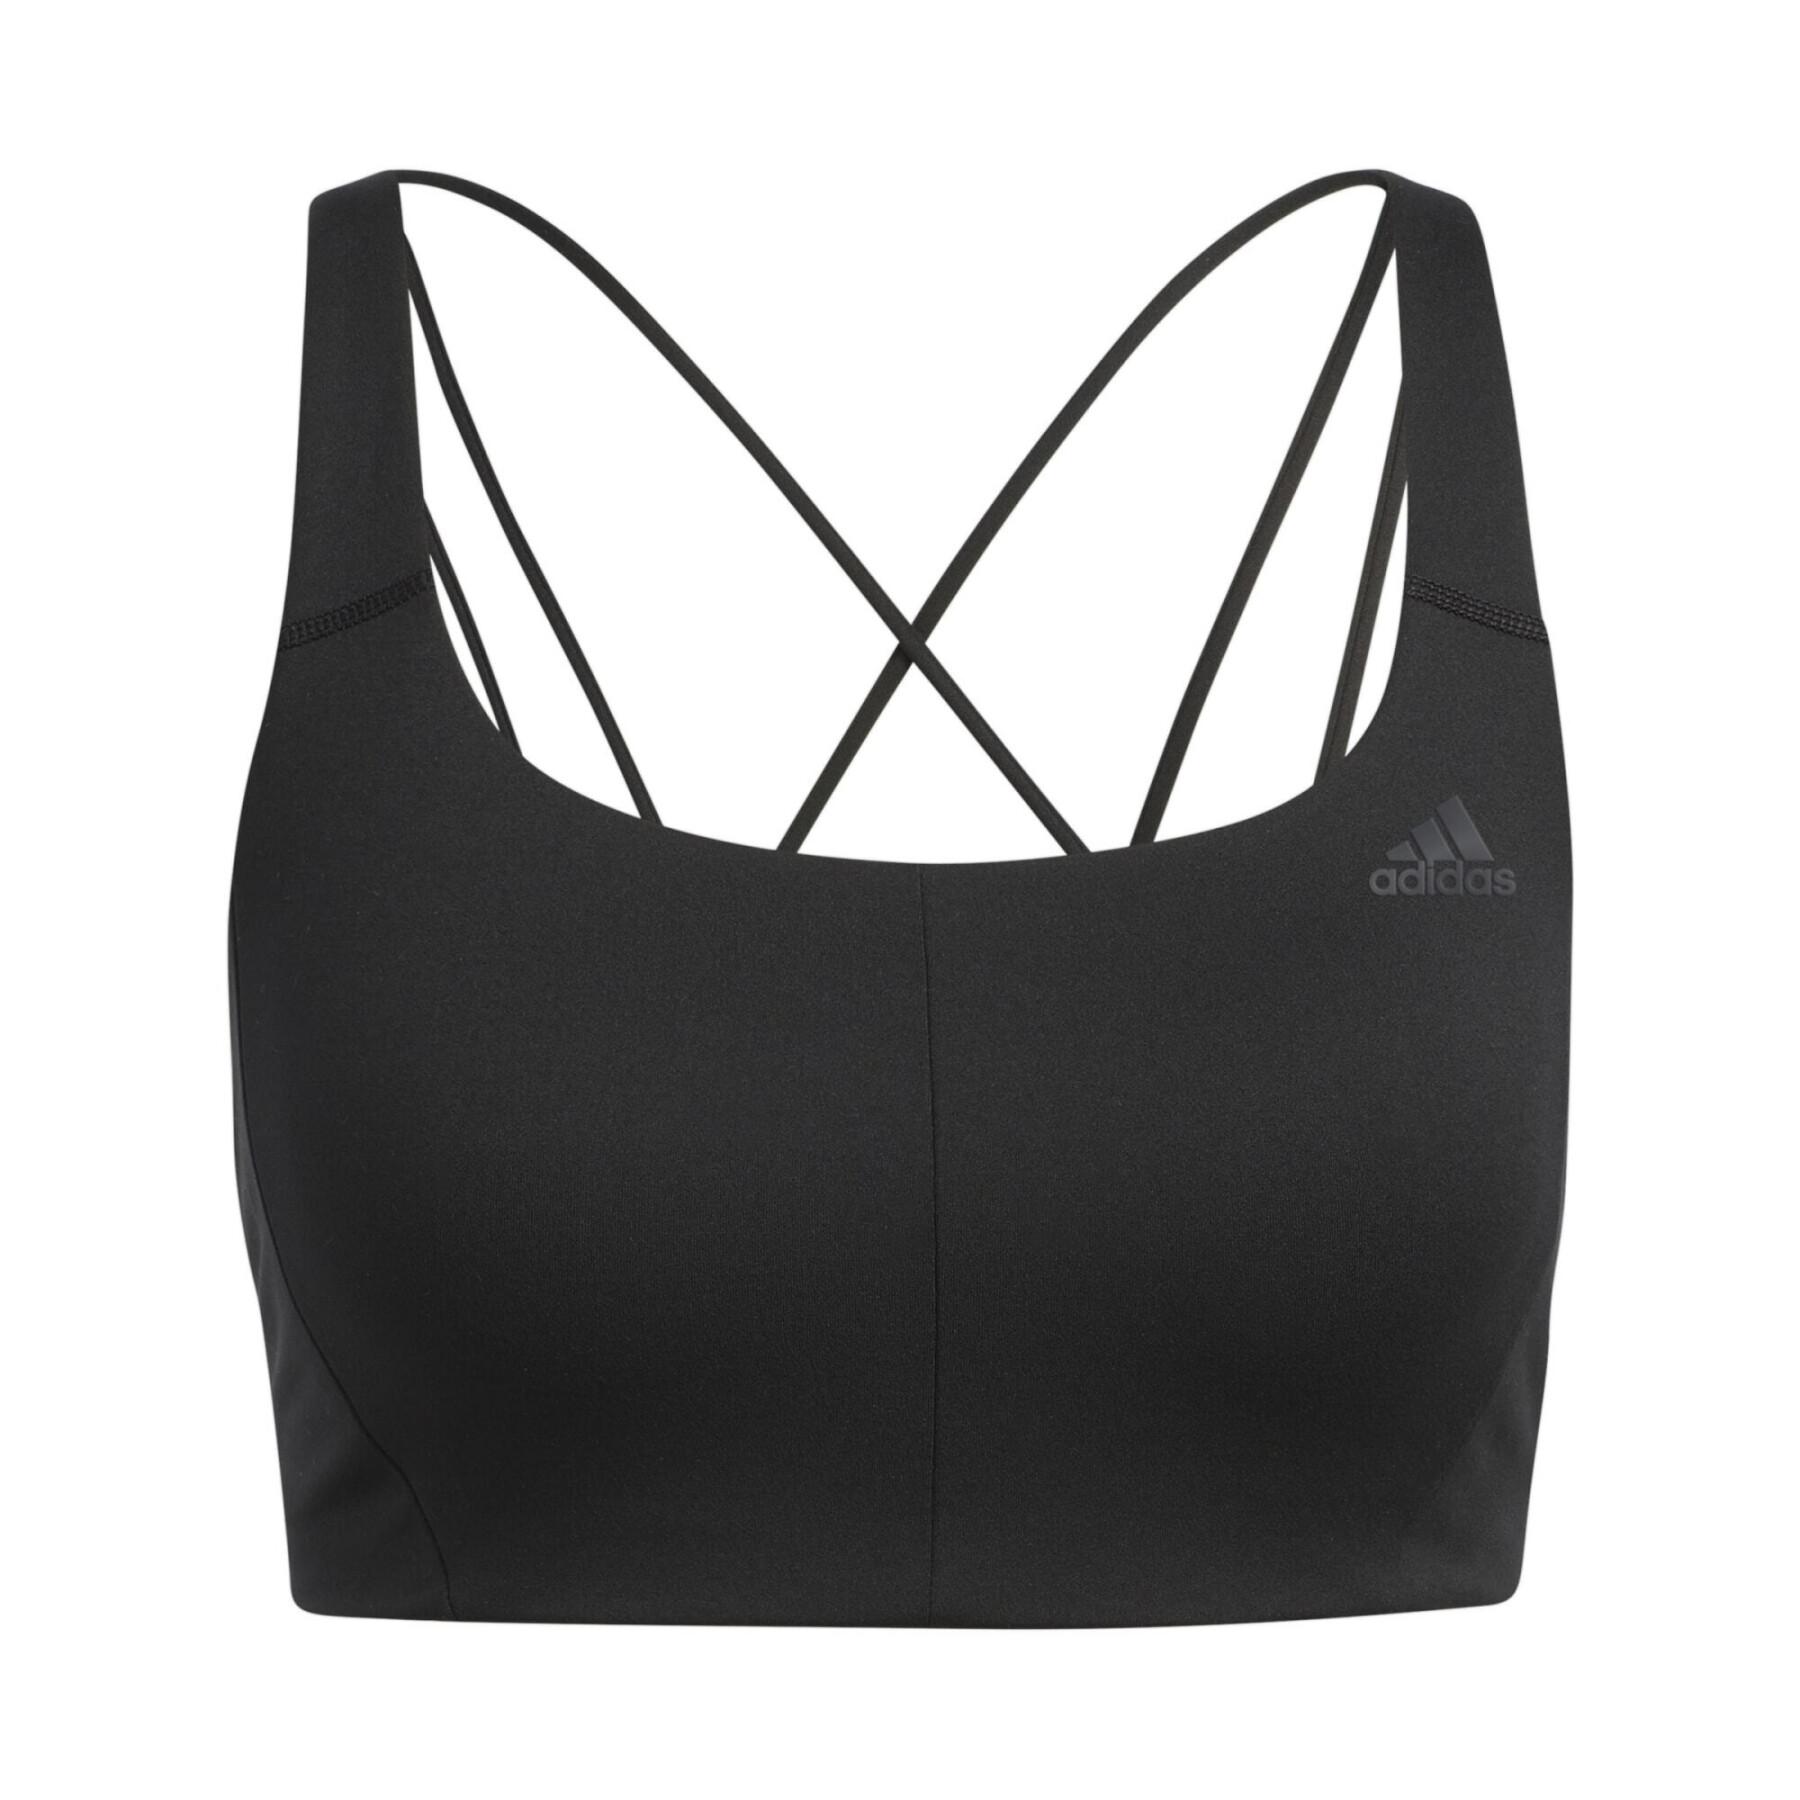 Medium support bra for women adidas CoreFlow - Bras - Women's volleyball  wear - Volleyball wear